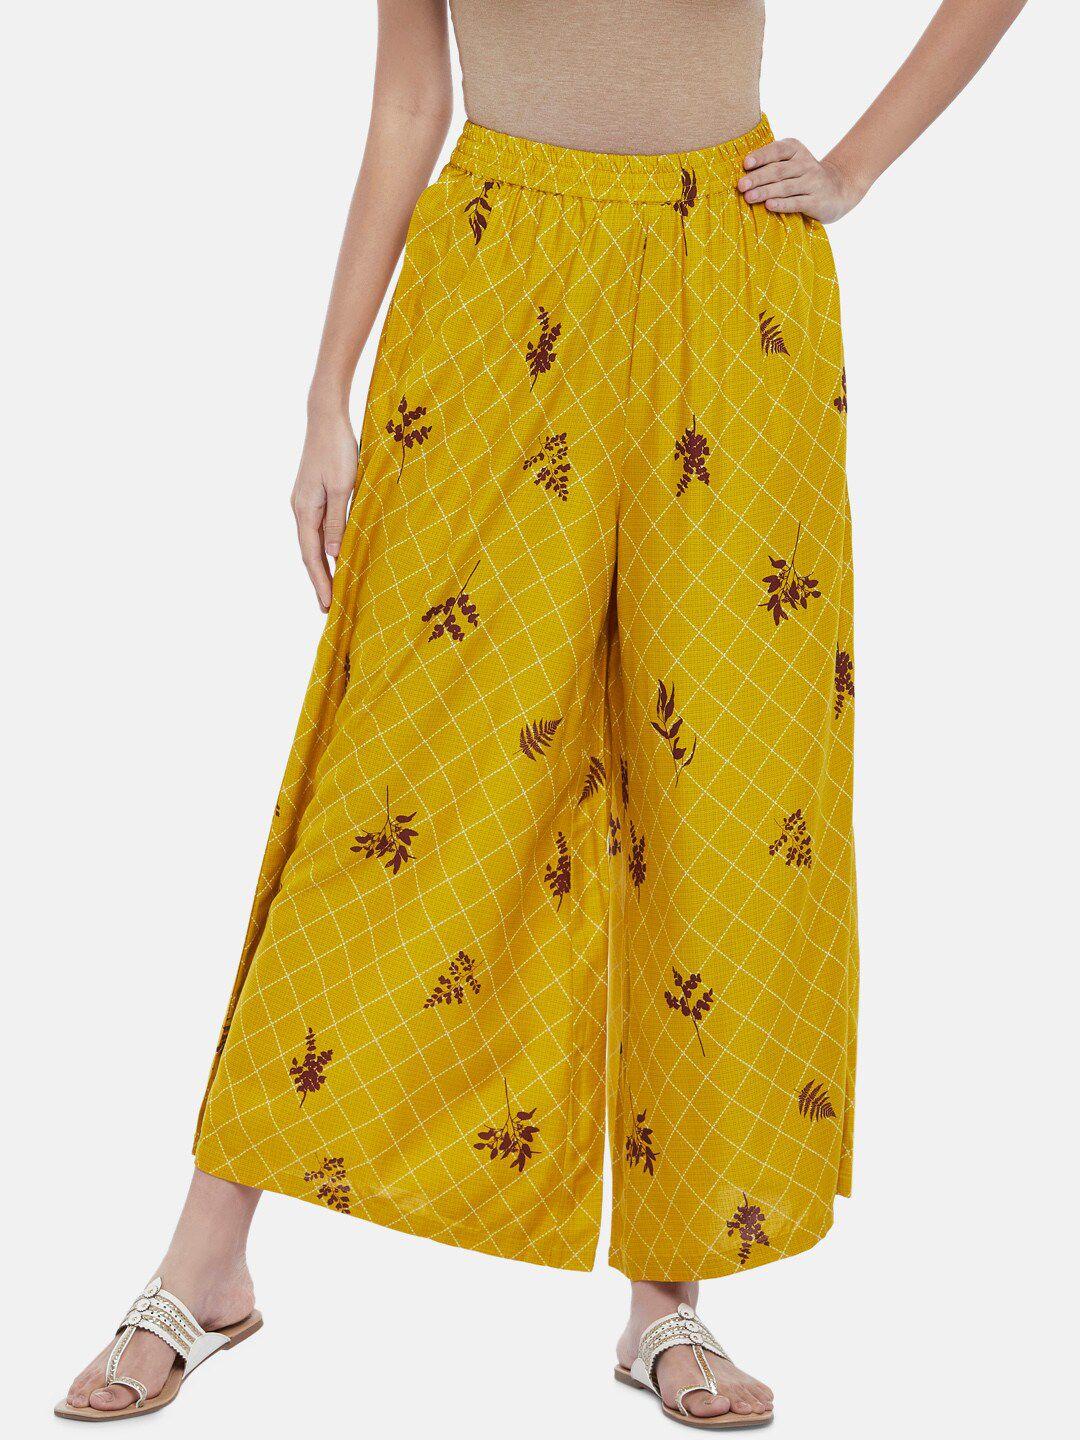 rangmanch by pantaloons women mustard yellow & brown floral printed ethnic palazzos